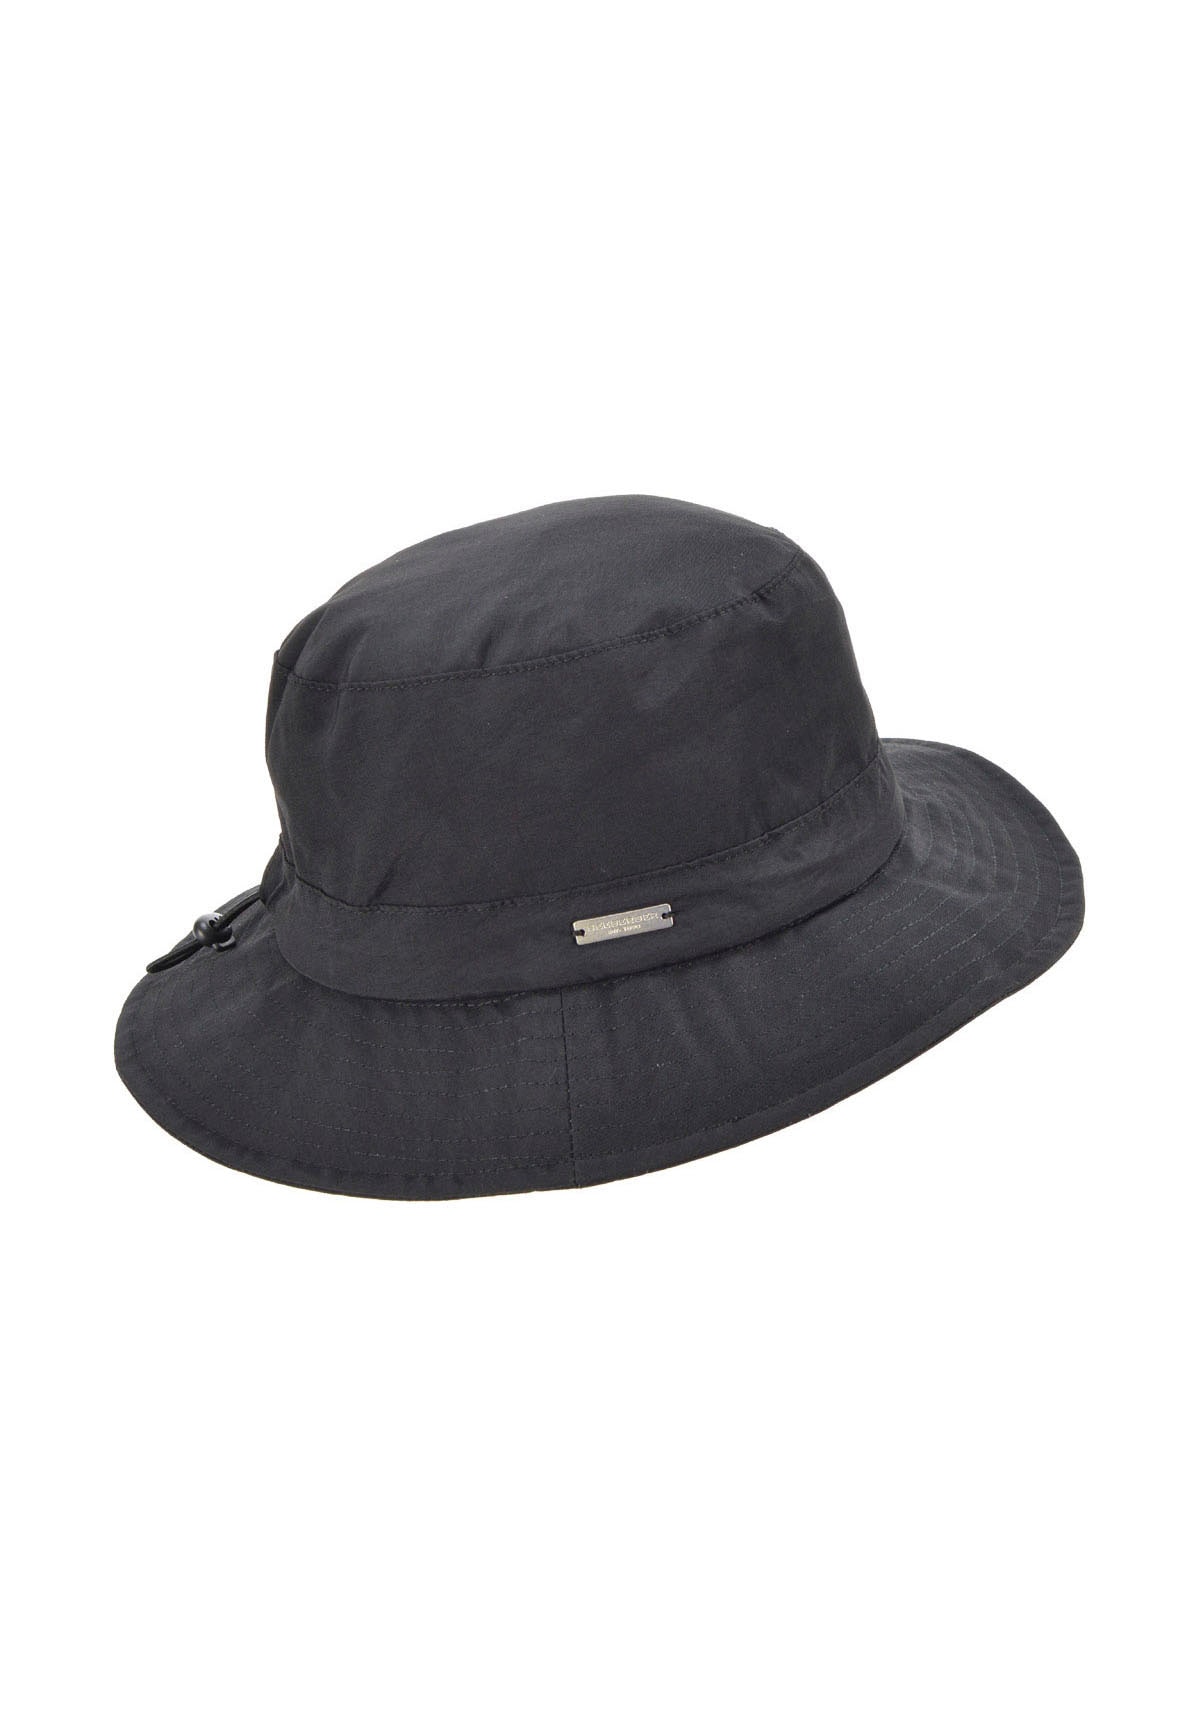 Seeberger Fischerhut, Bucket bei Hat